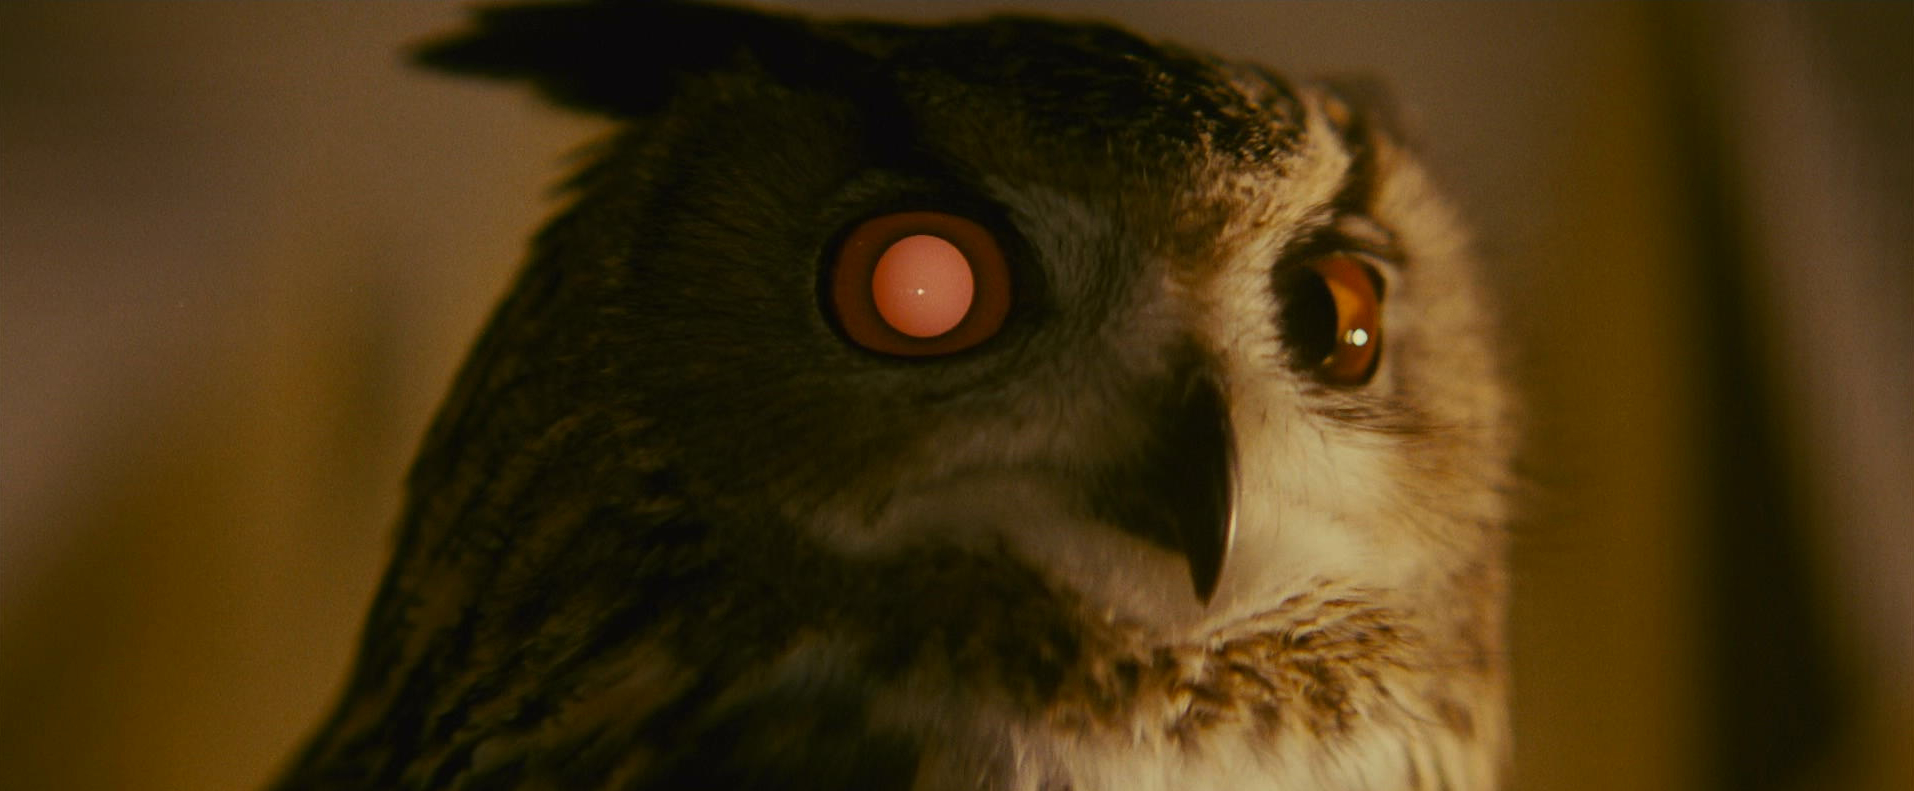 Blade Runner - Ridley Scott - owl - red eyes - replicant